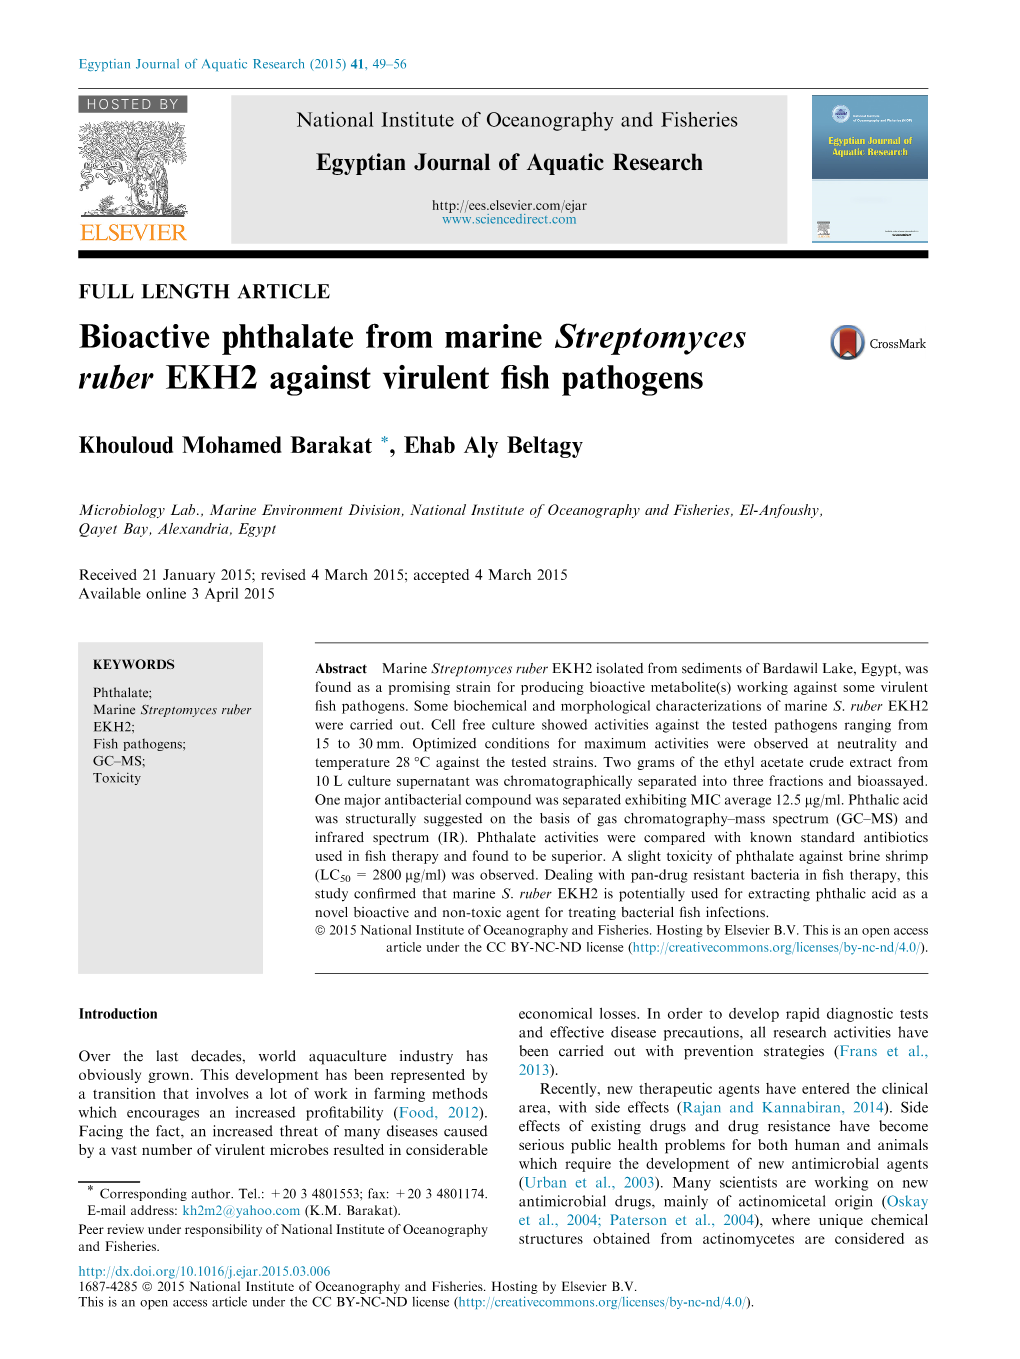 Bioactive Phthalate from Marine Streptomyces Ruber EKH2 Against Virulent ﬁsh Pathogens